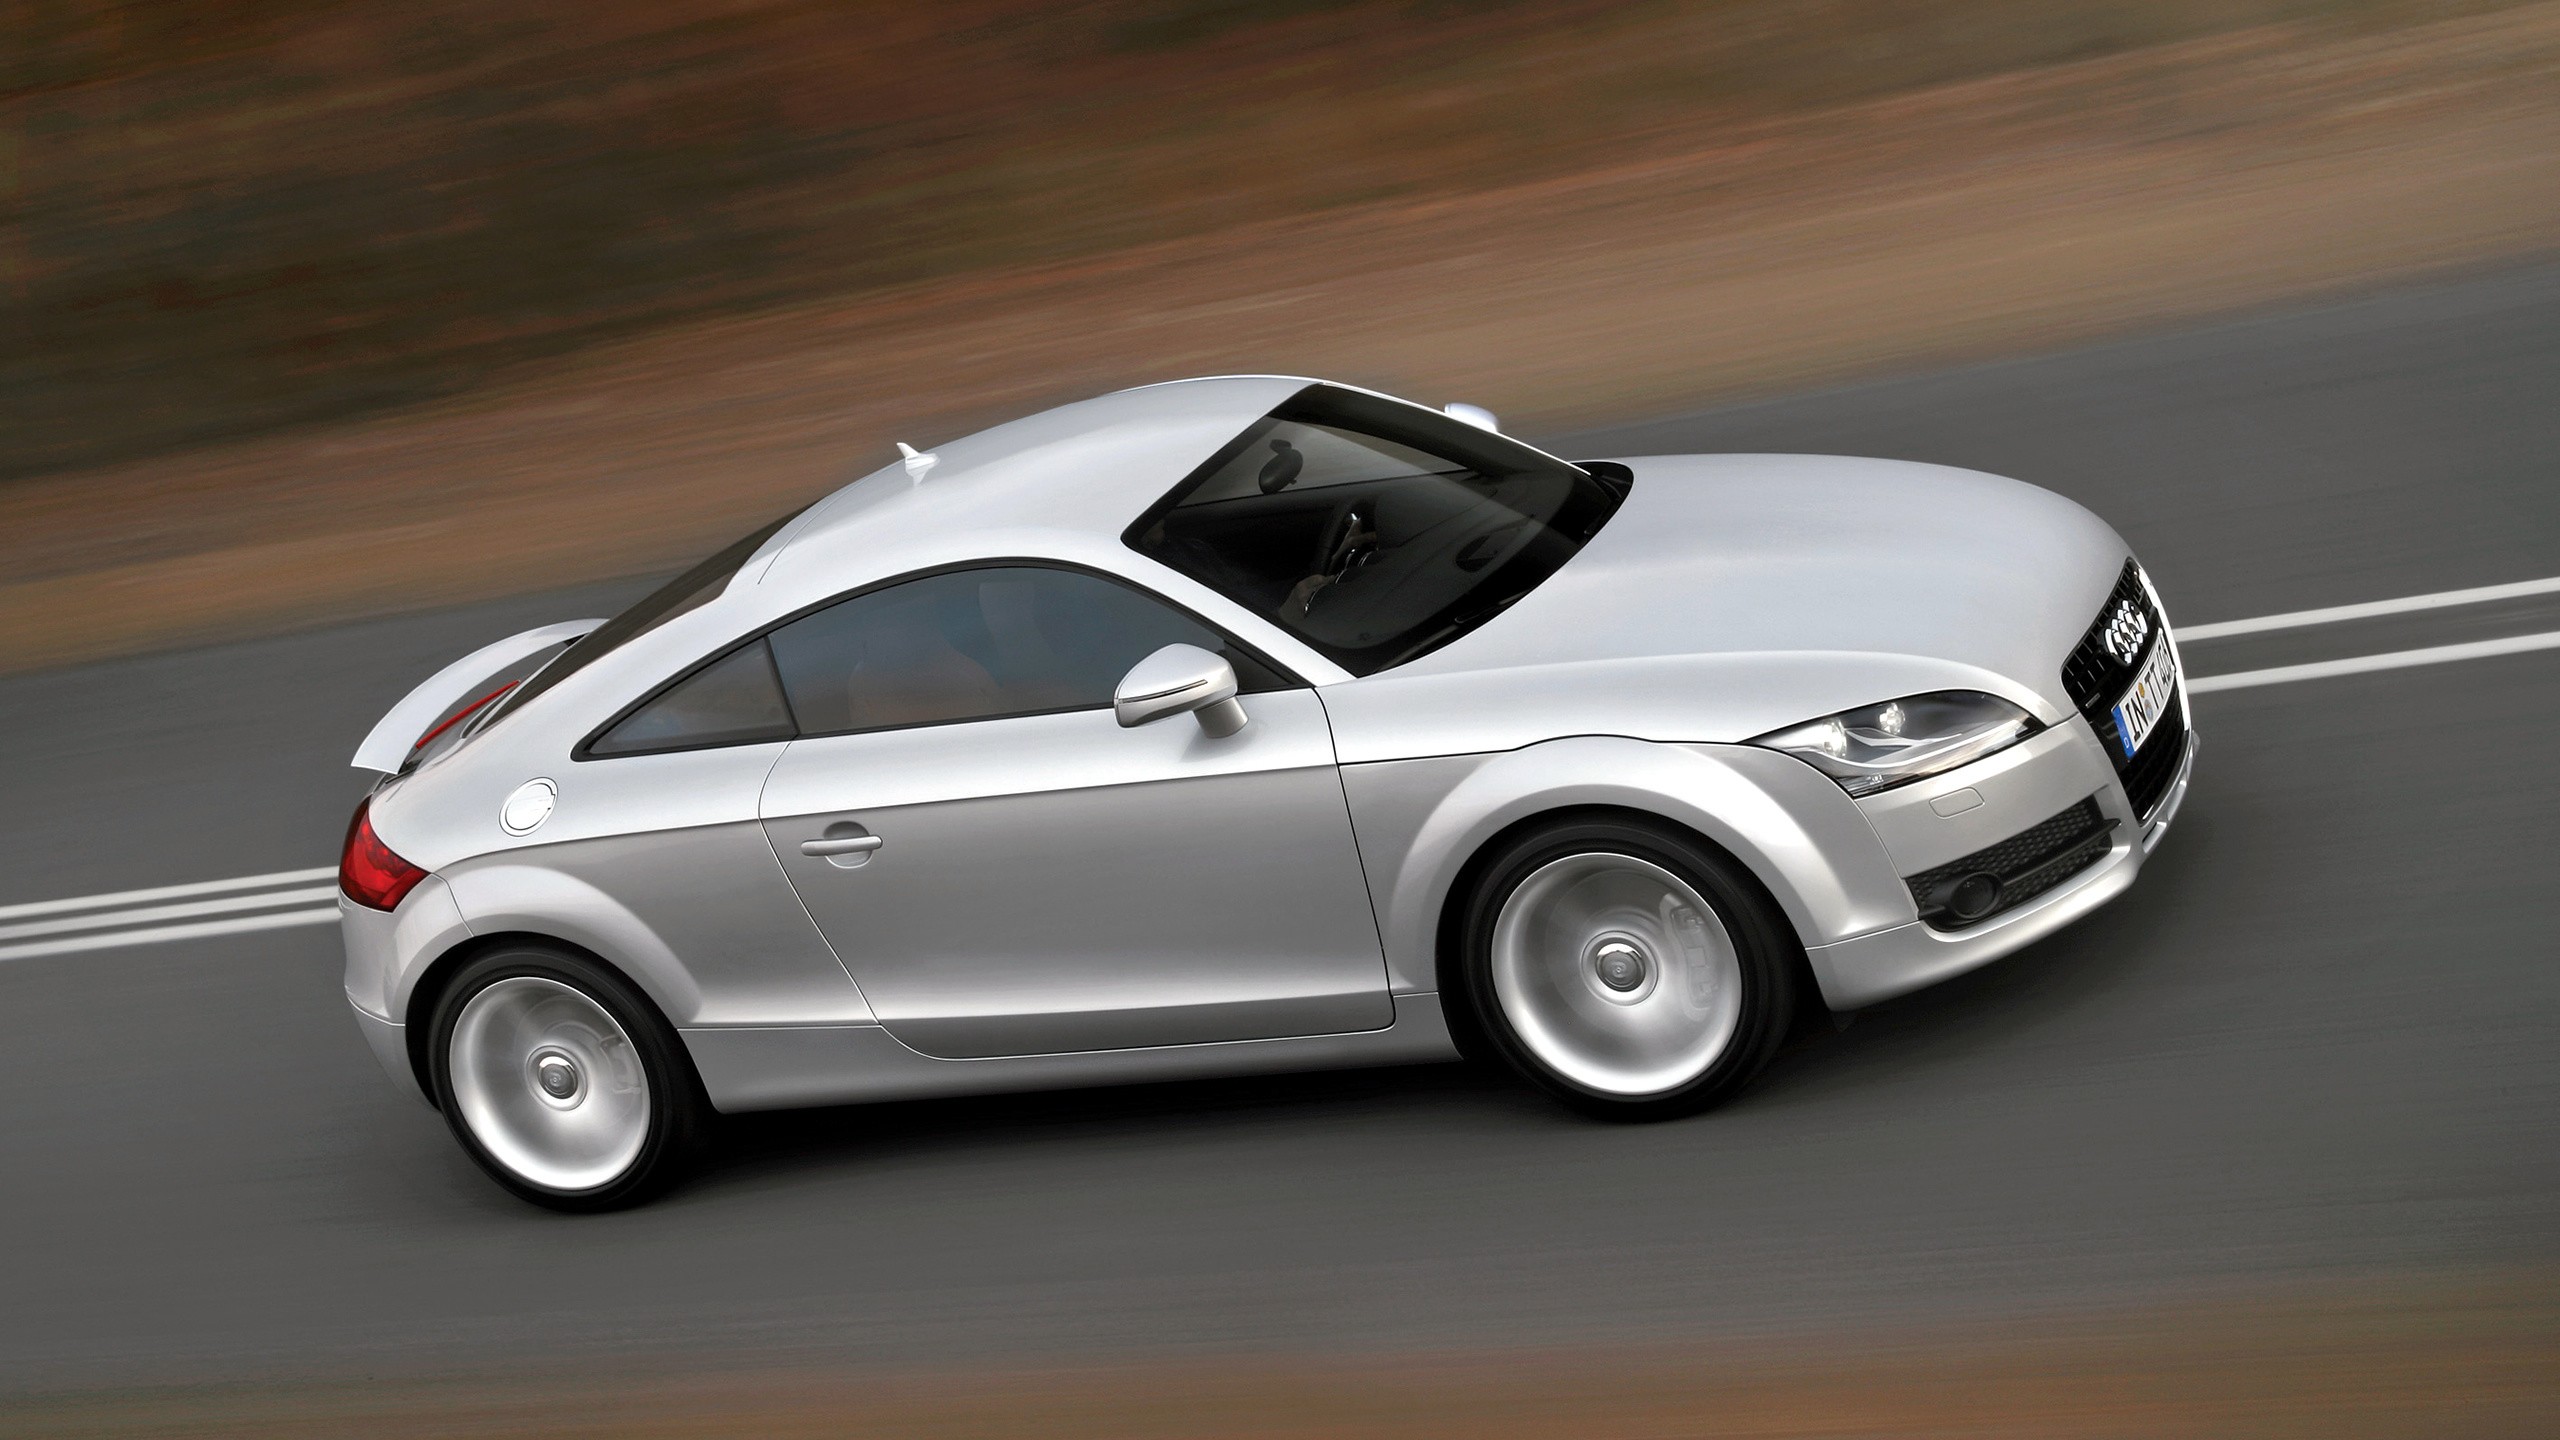 General 2560x1440 Audi Audi TT car vehicle silver cars road asphalt German cars Volkswagen Group